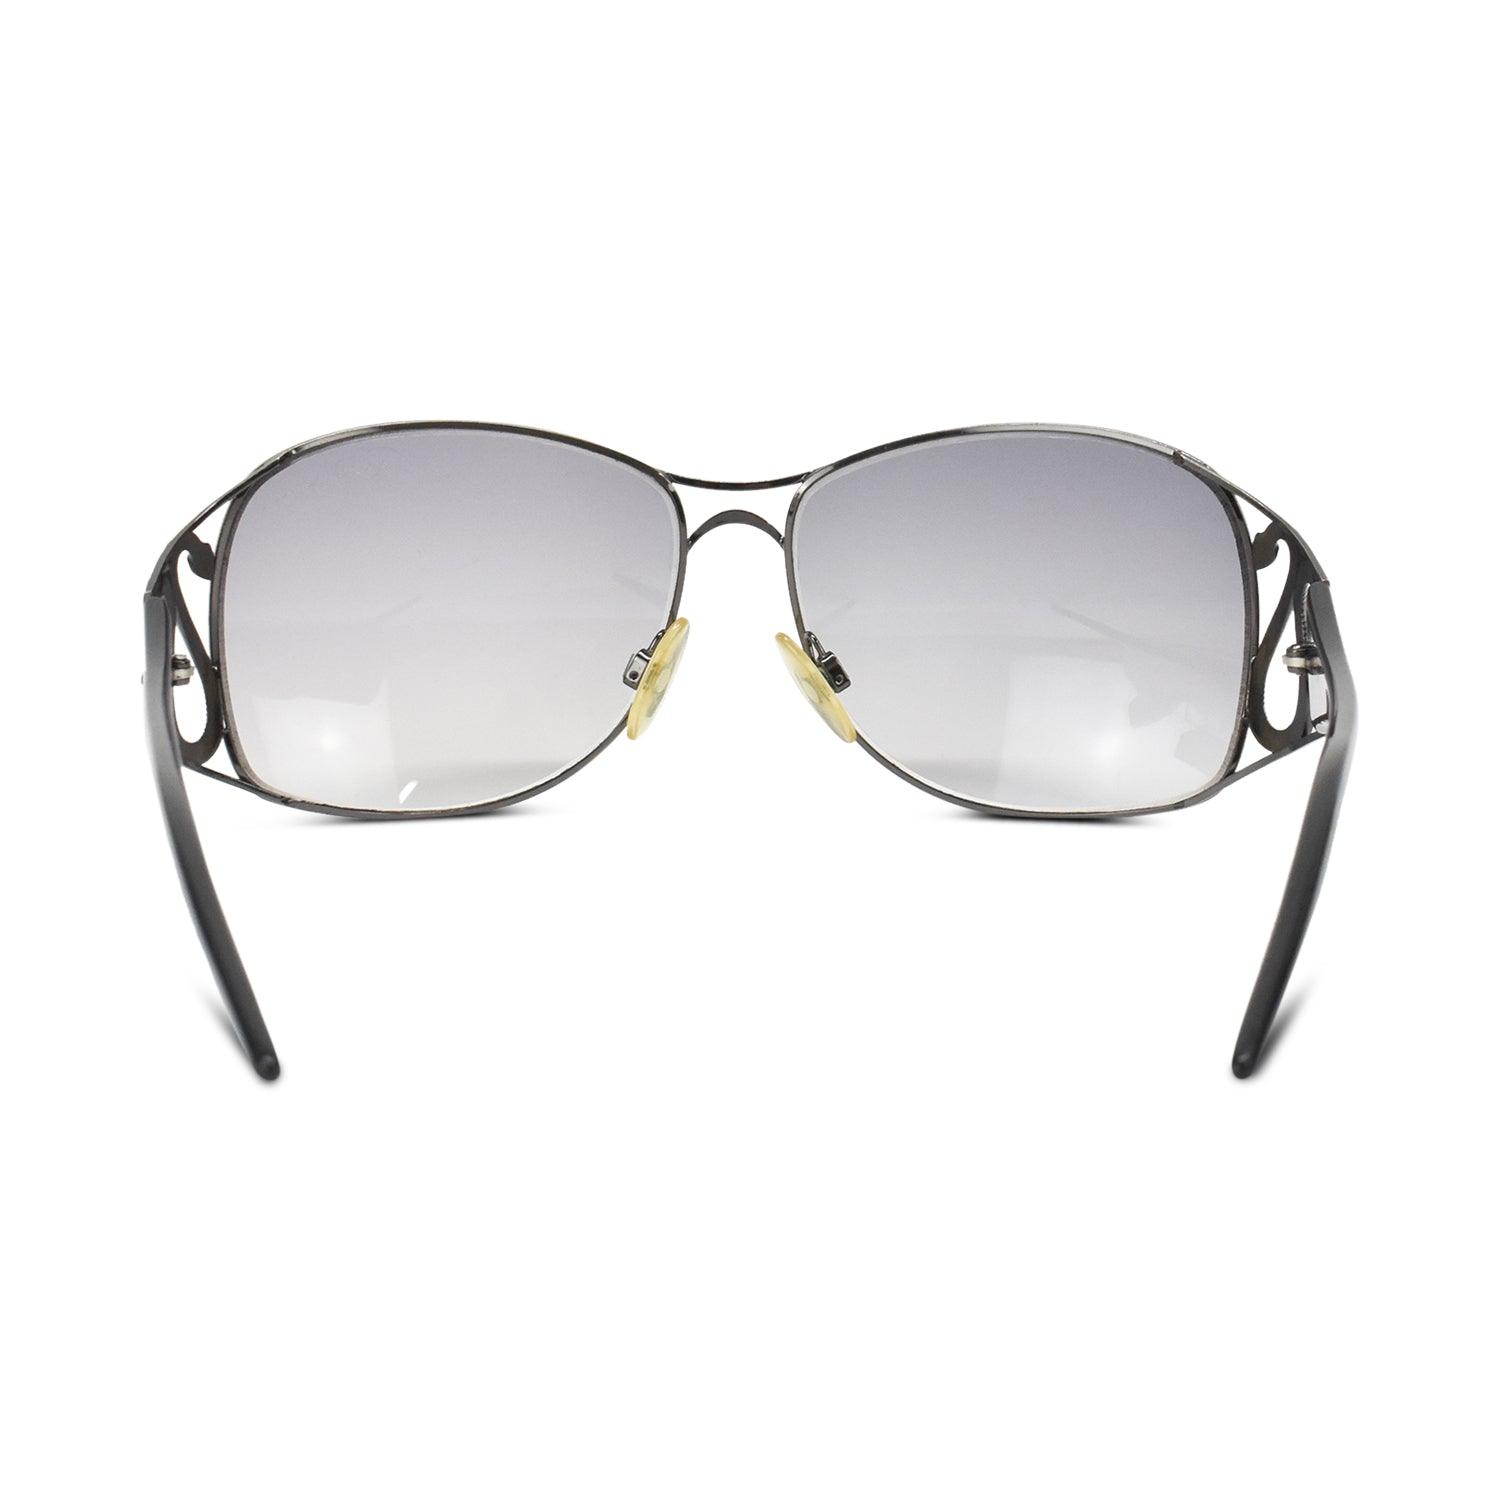 Roberto Cavalli Sunglasses - Fashionably Yours